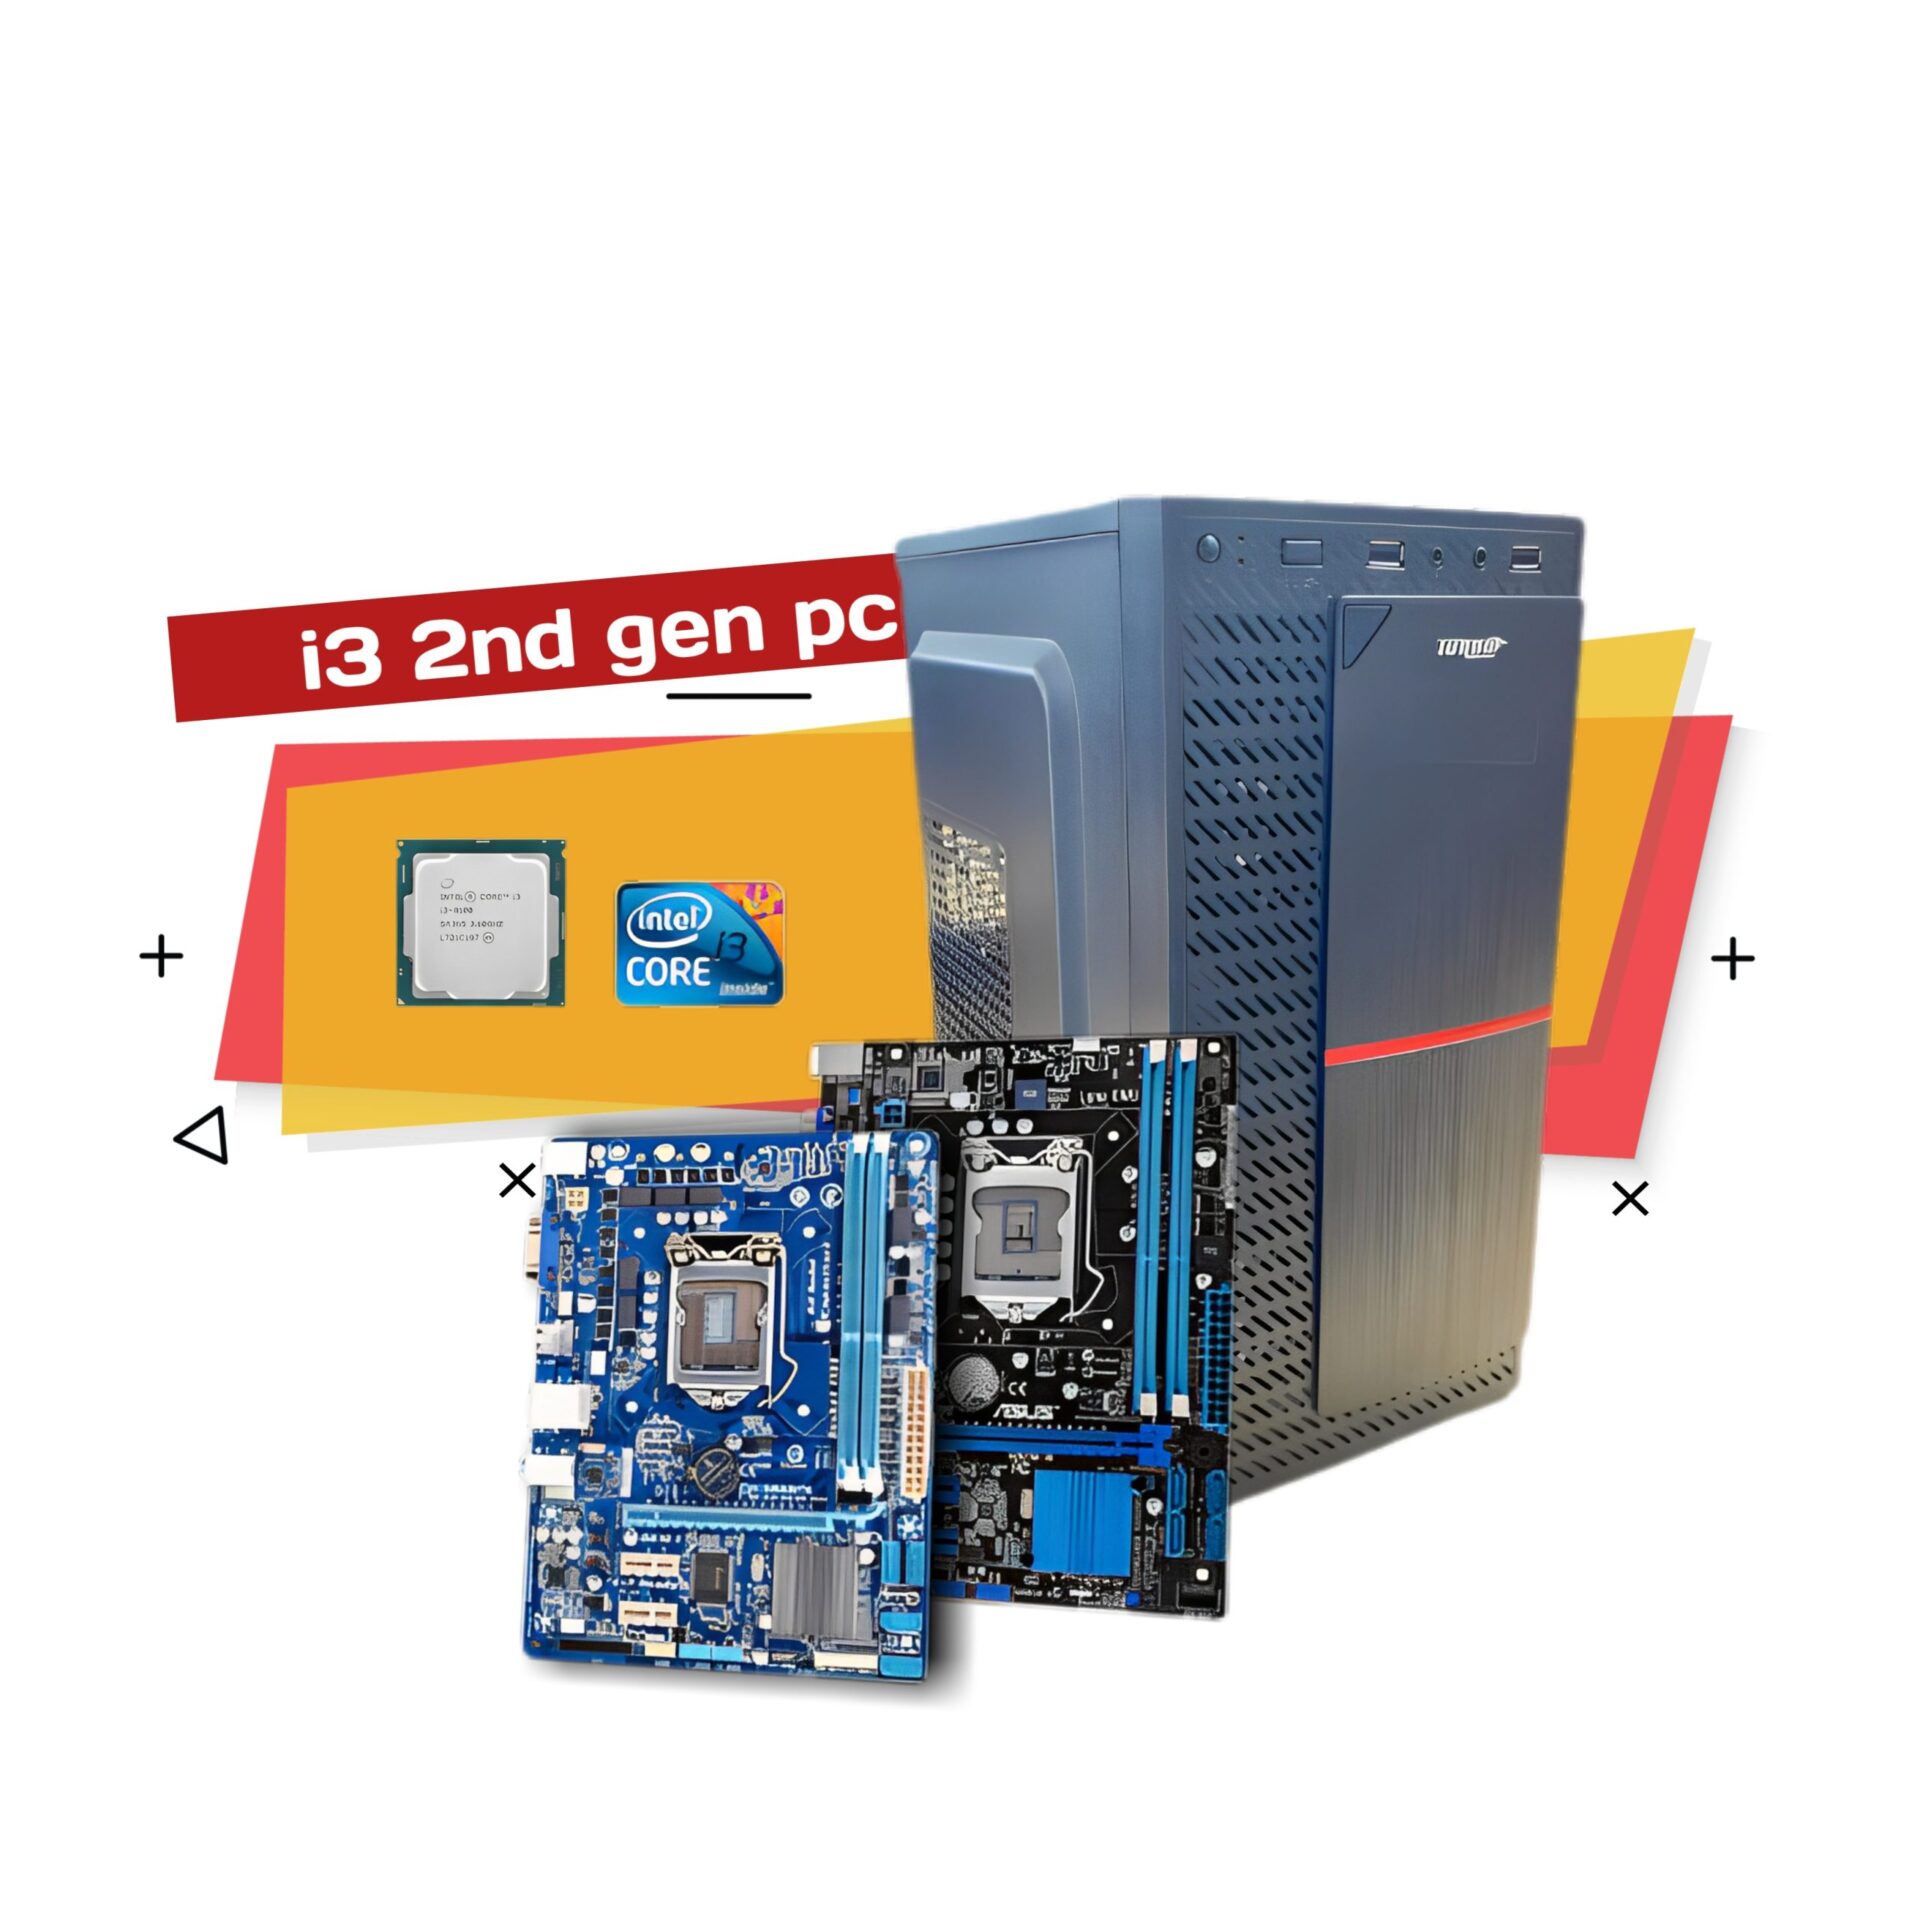 Core i3 2nd Gen PC Price in Bangladesh